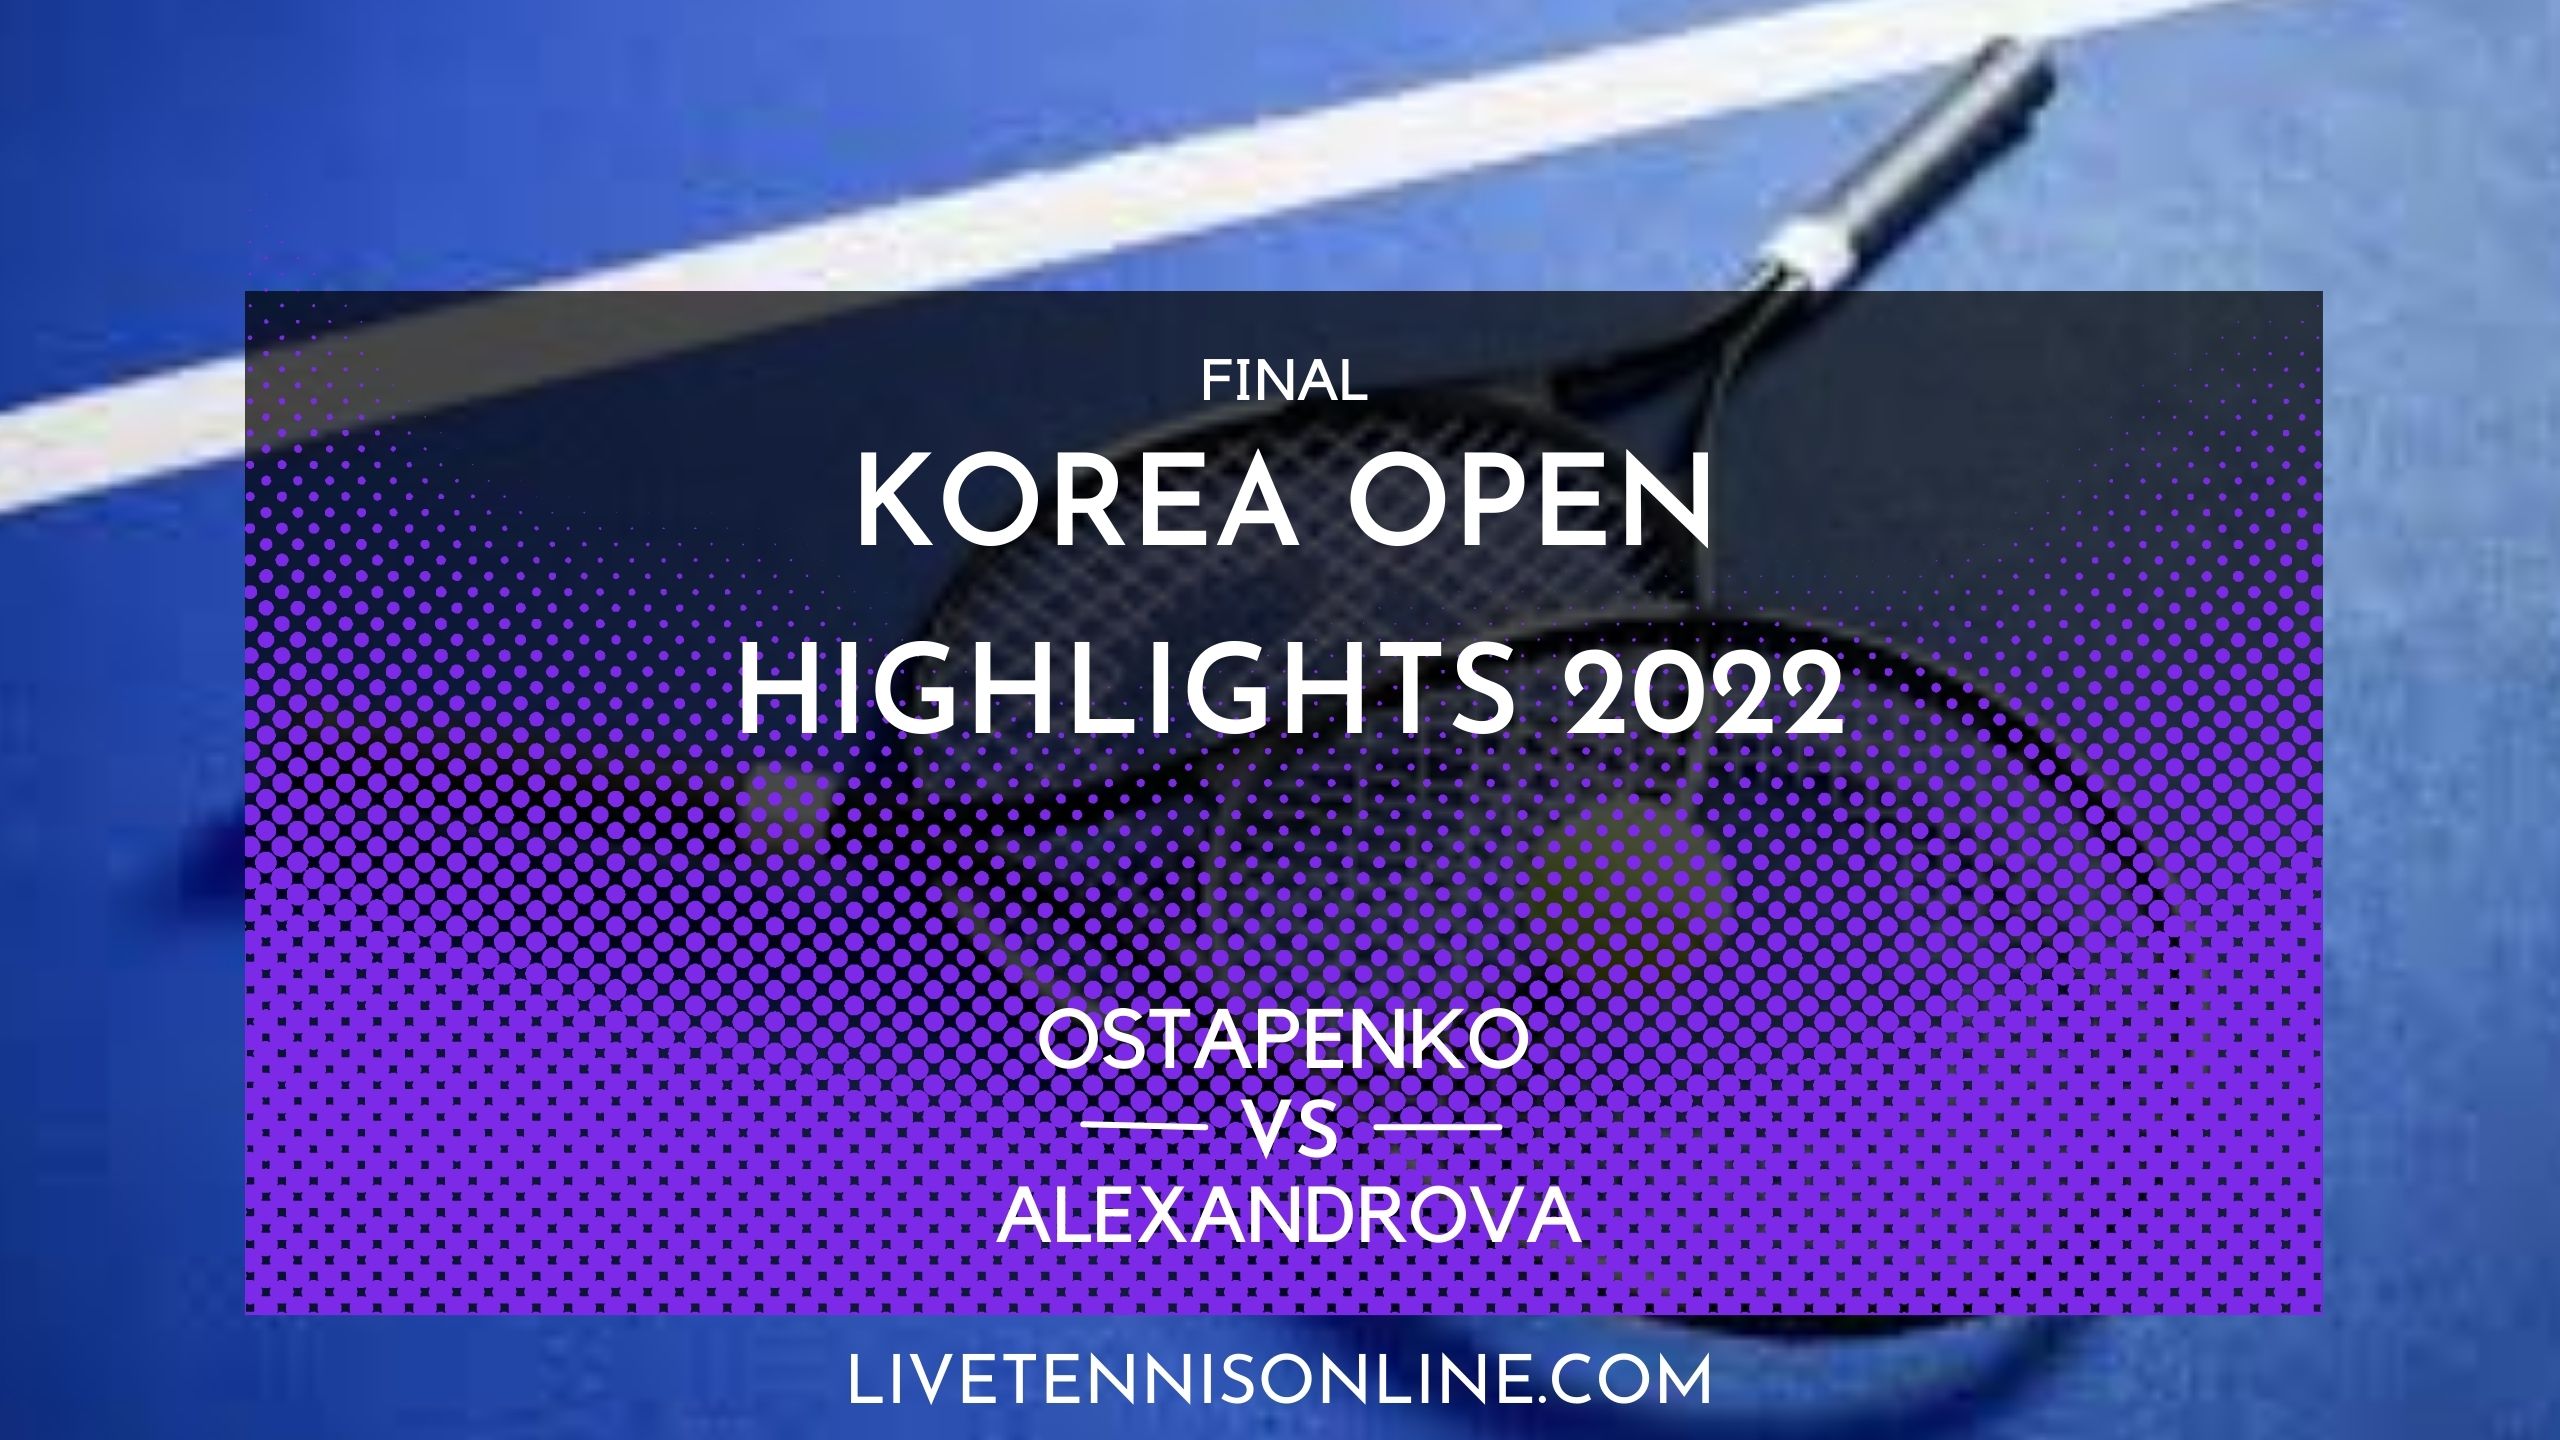 Ostapenko Vs Alexandrova Final Highlights 2022 Korea Open